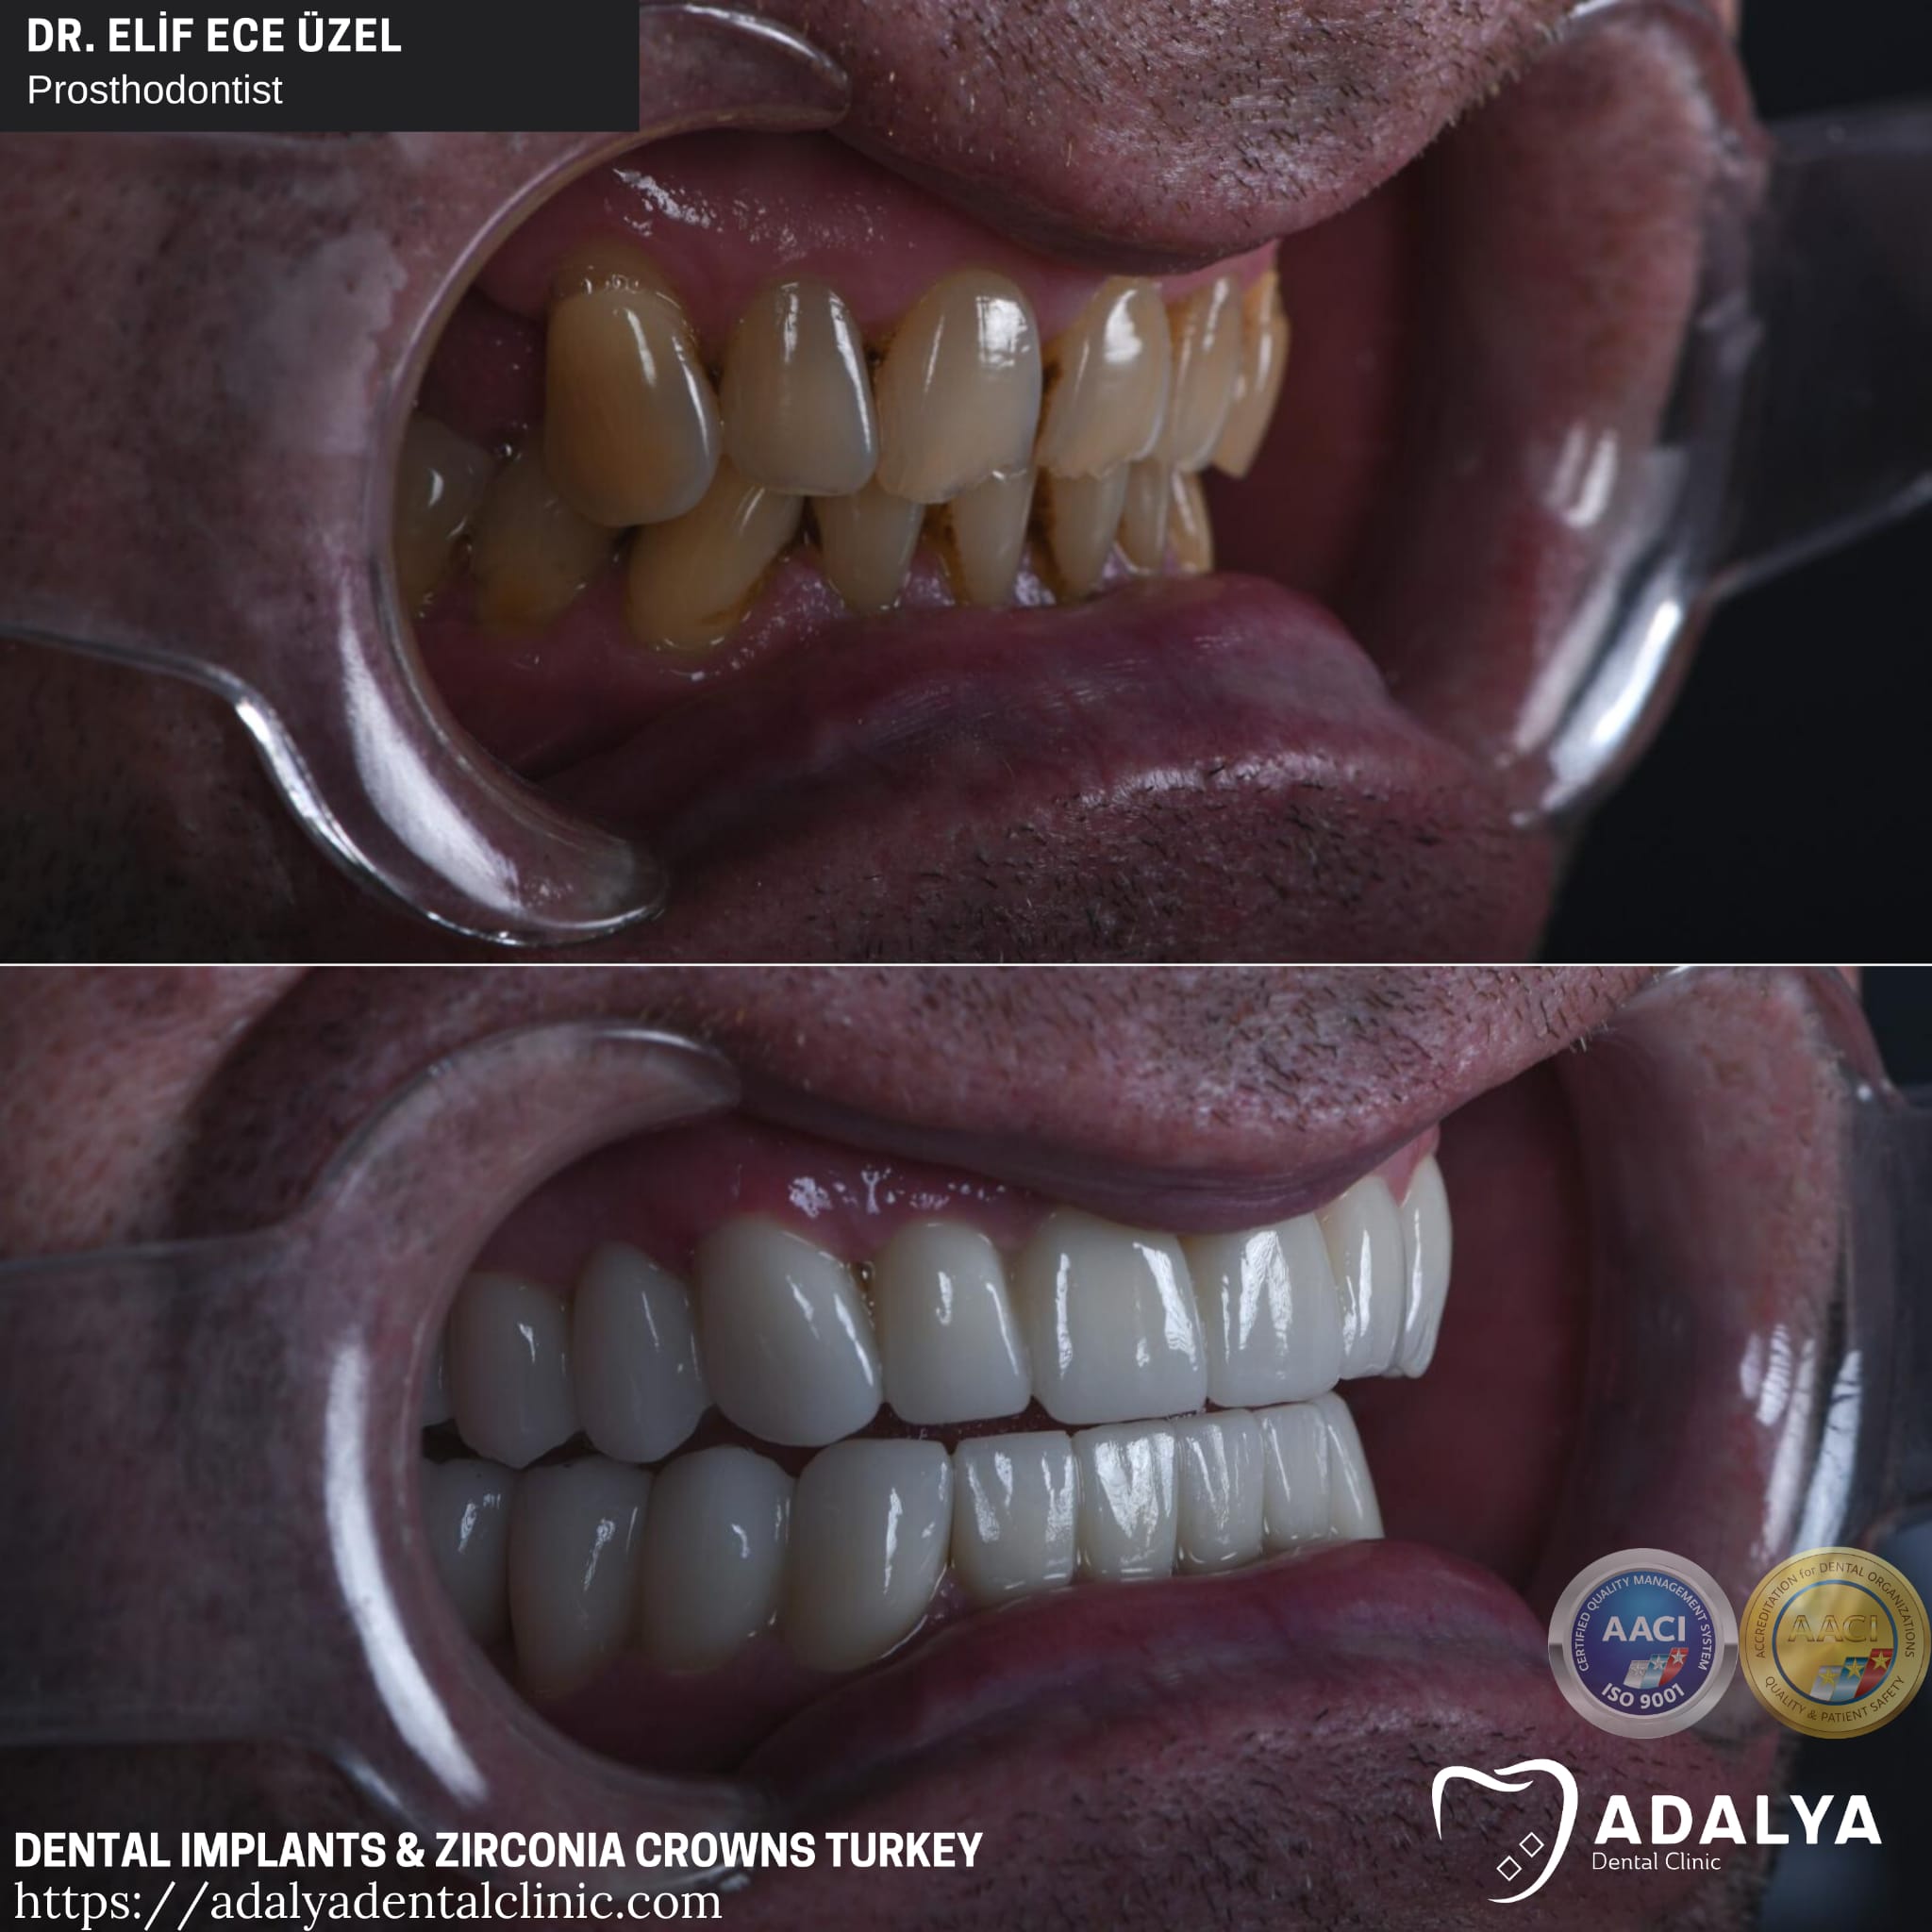 Zirkoniumkronen Zahnimplantate Truthahn Antalya Pakete kosten